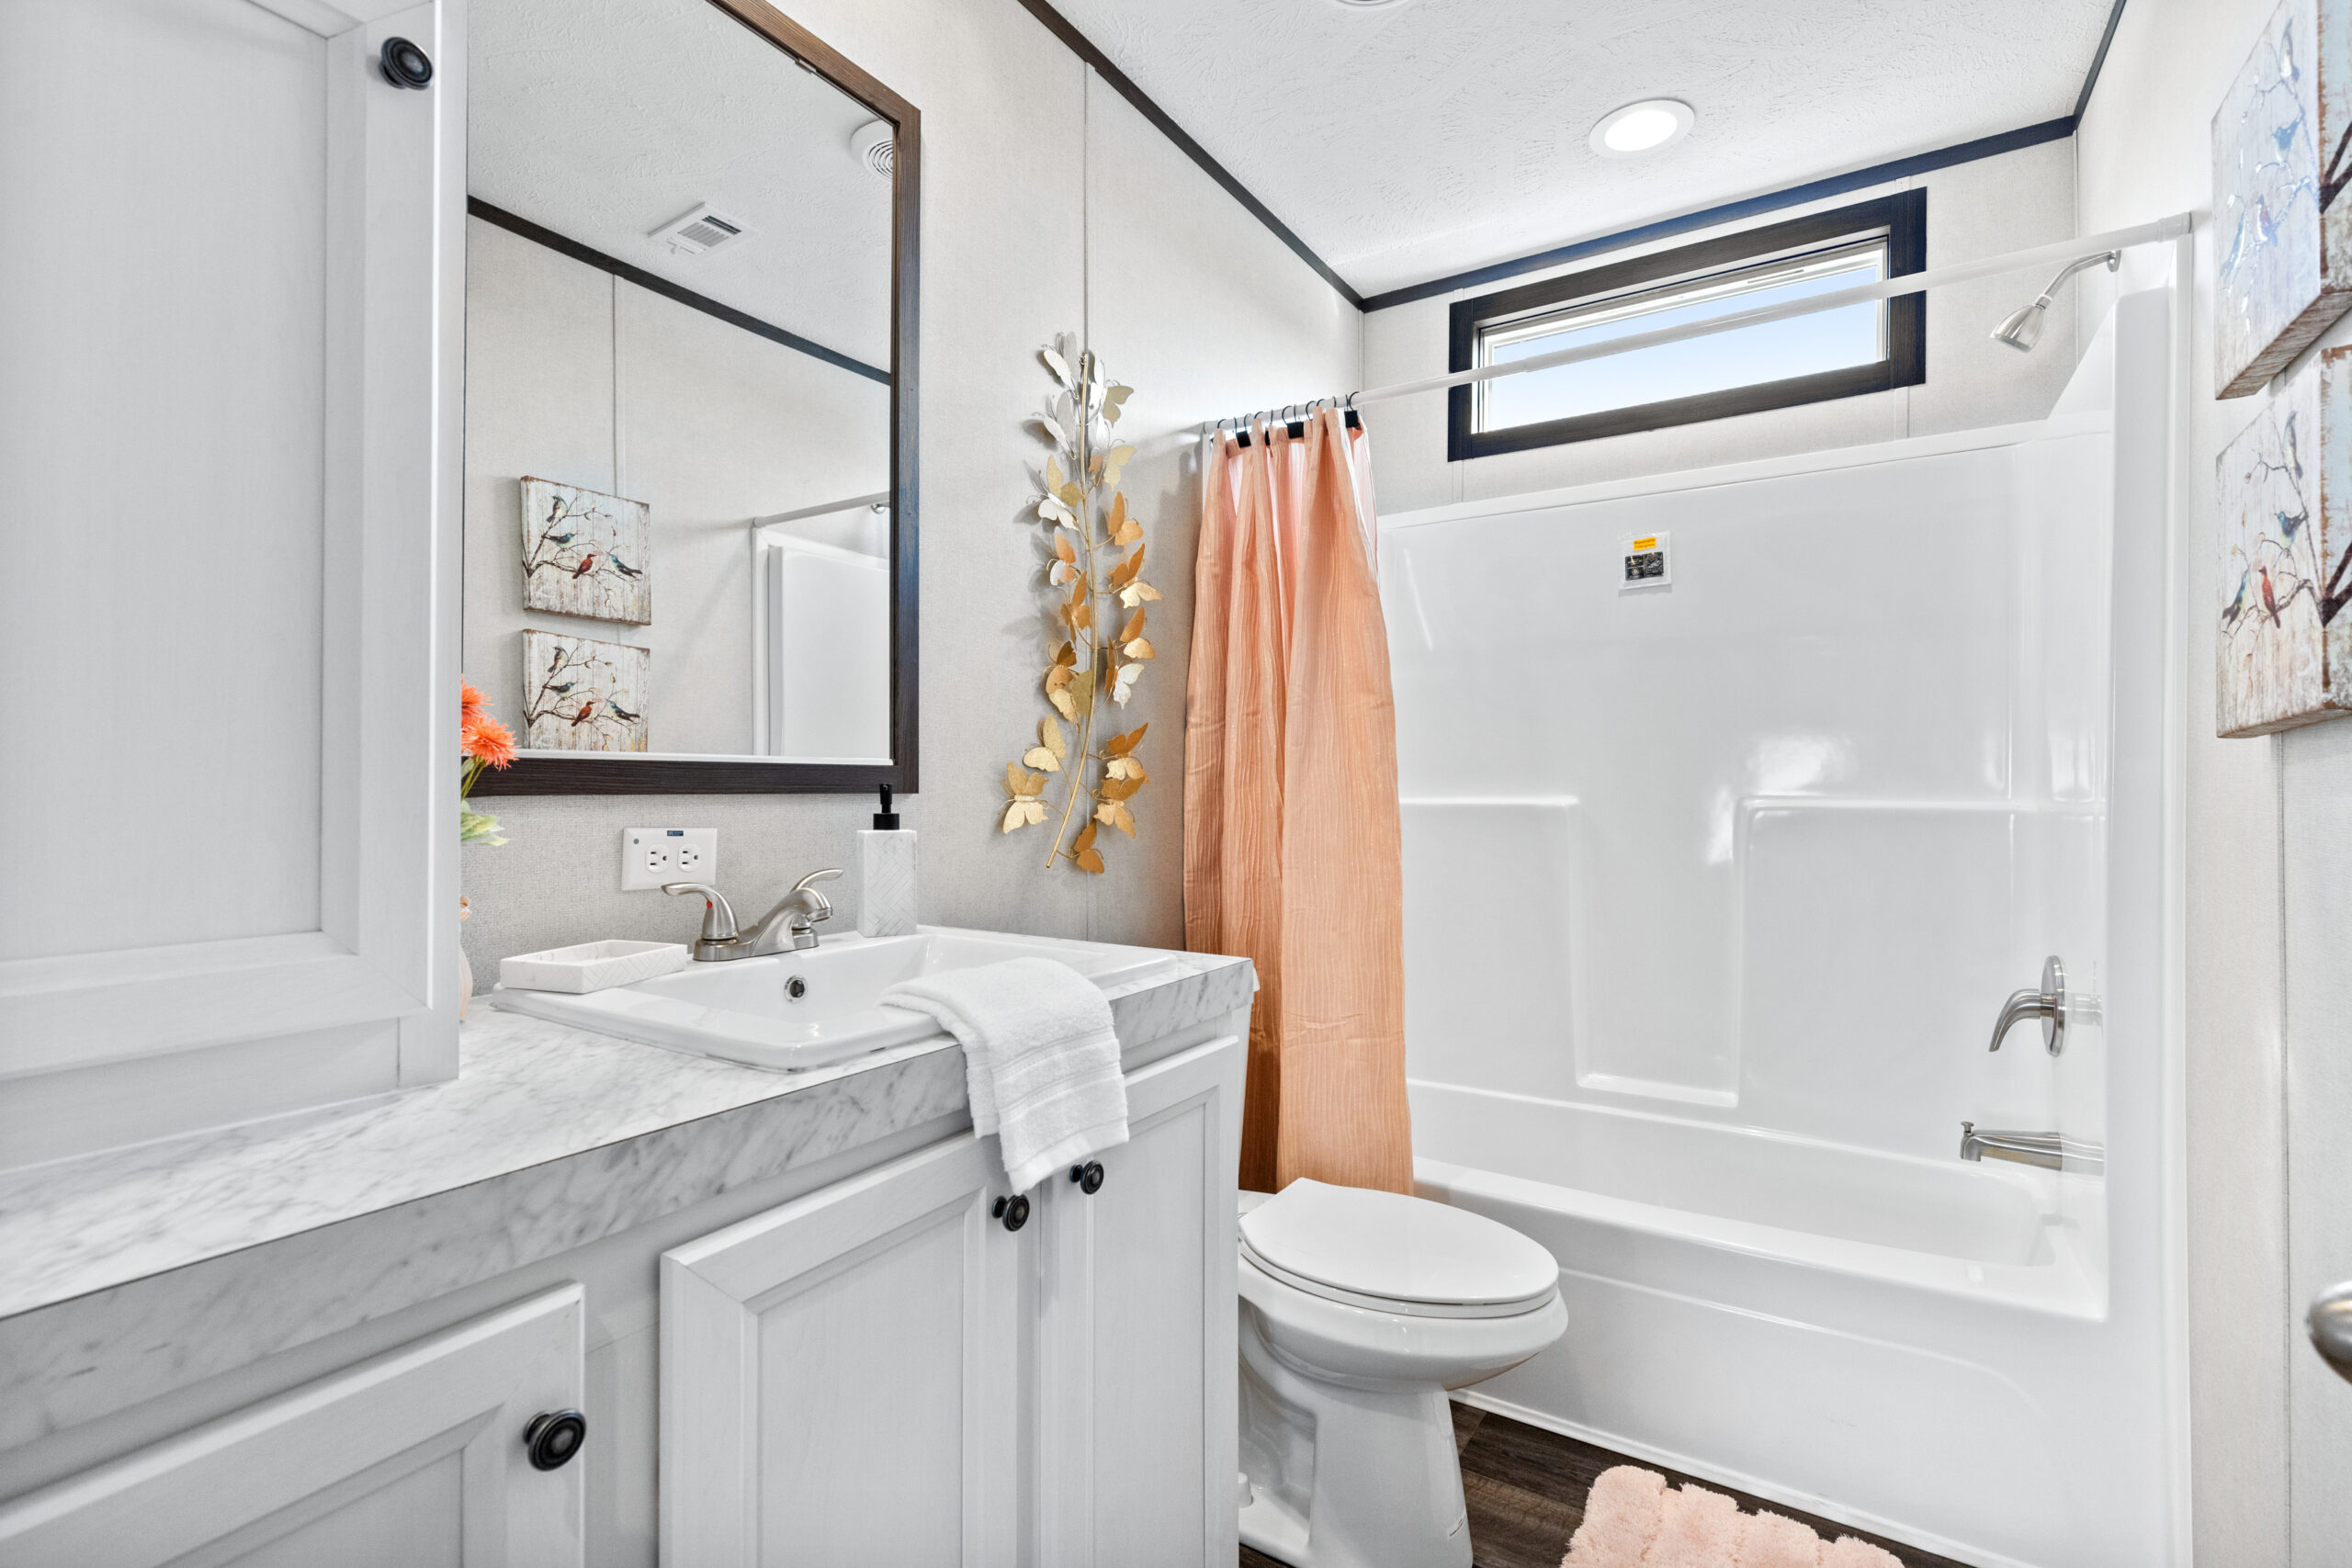 30x60” Fiberglass Tub/Shower Combo Guest Bath Only